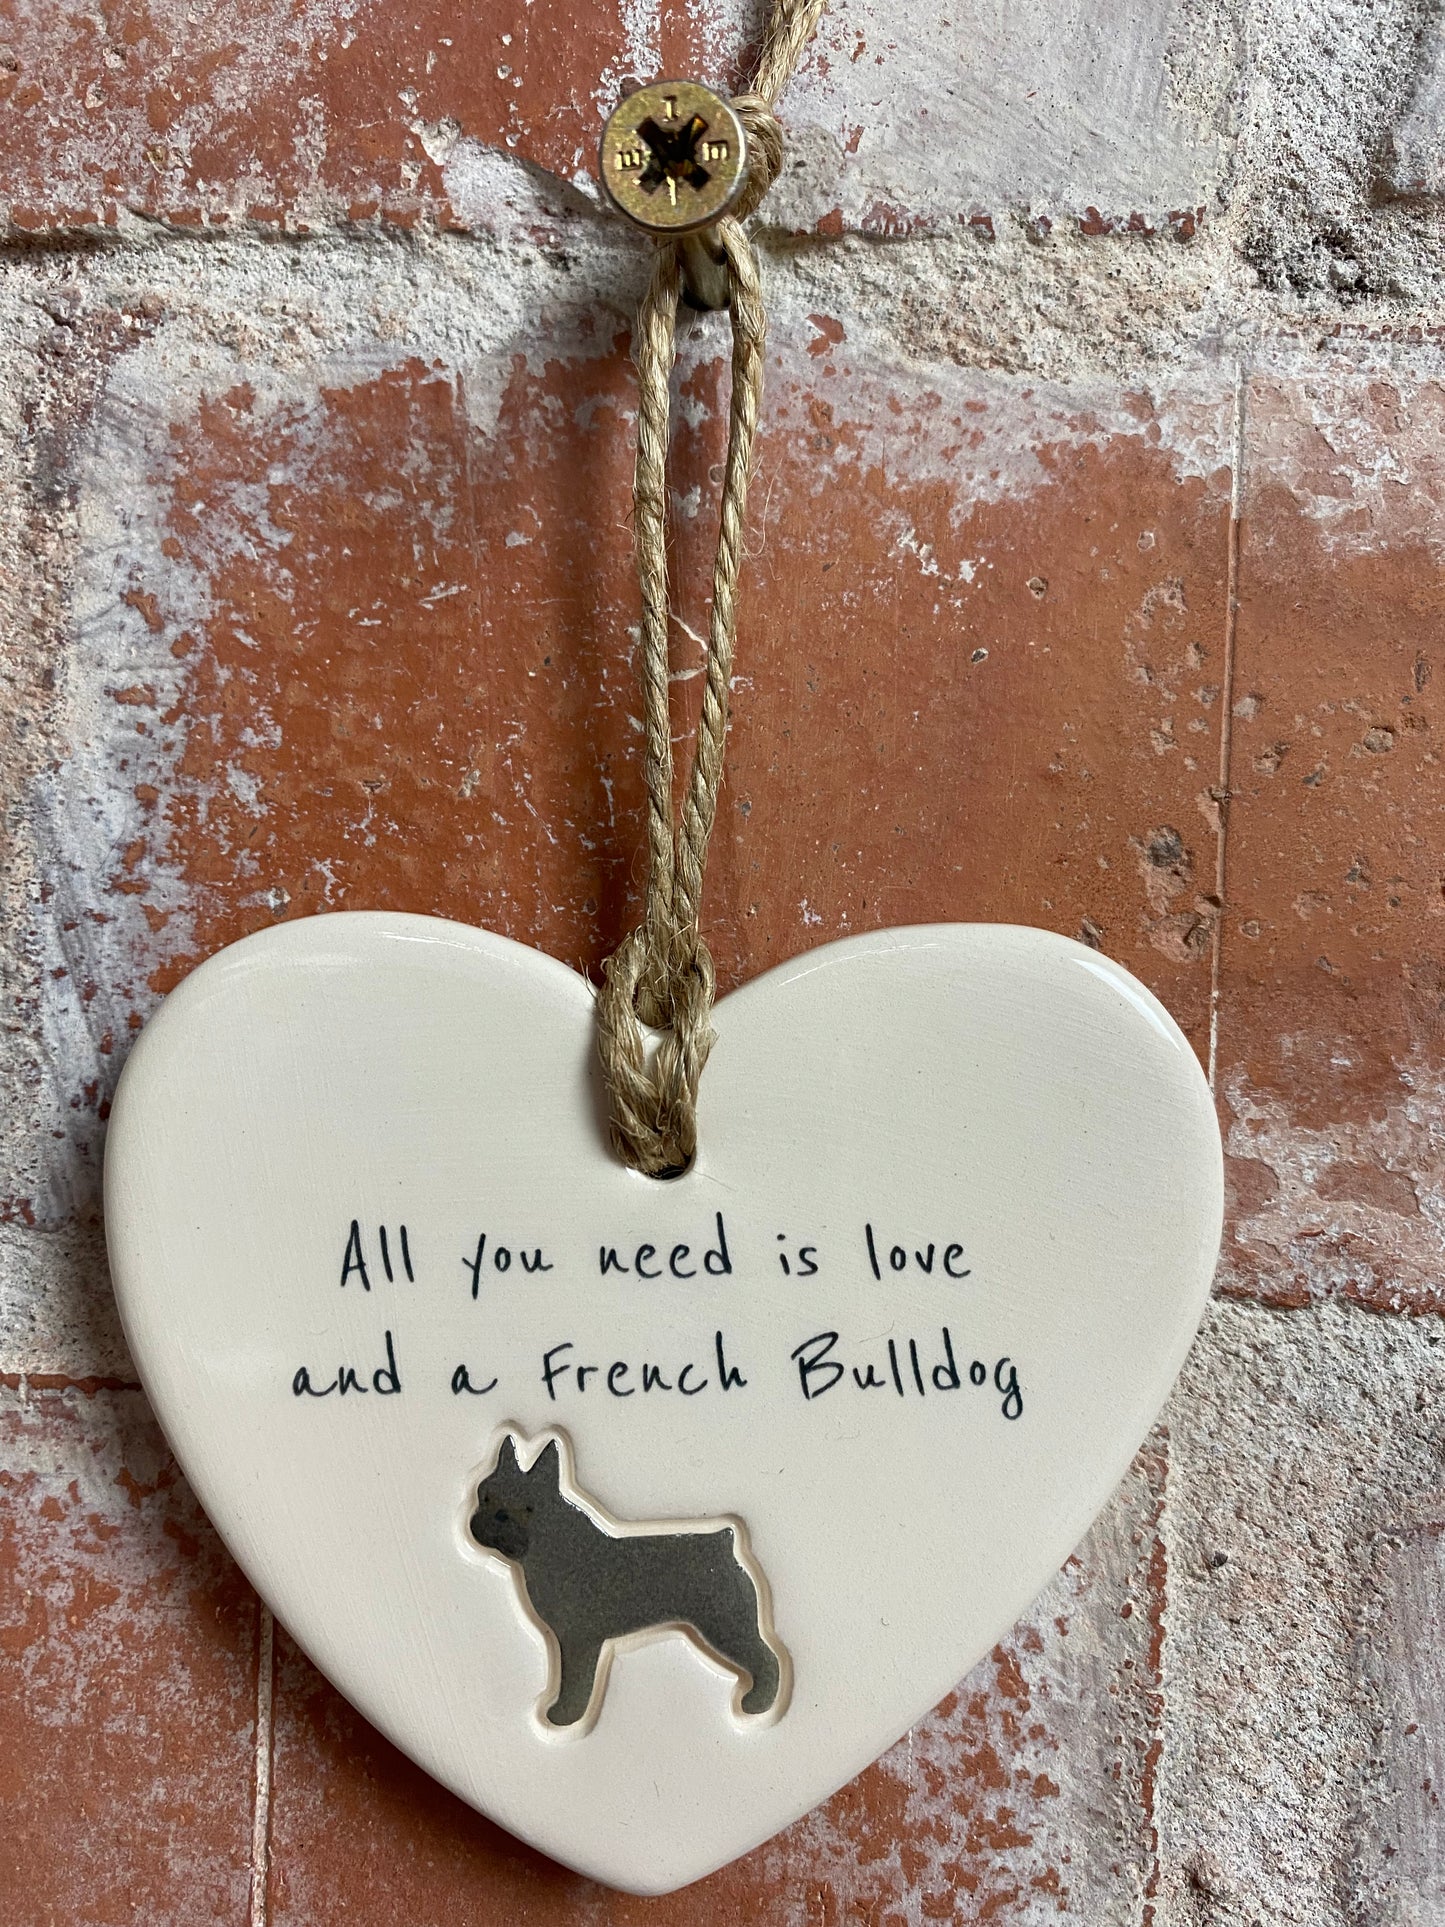 French bulldog ceramic heart